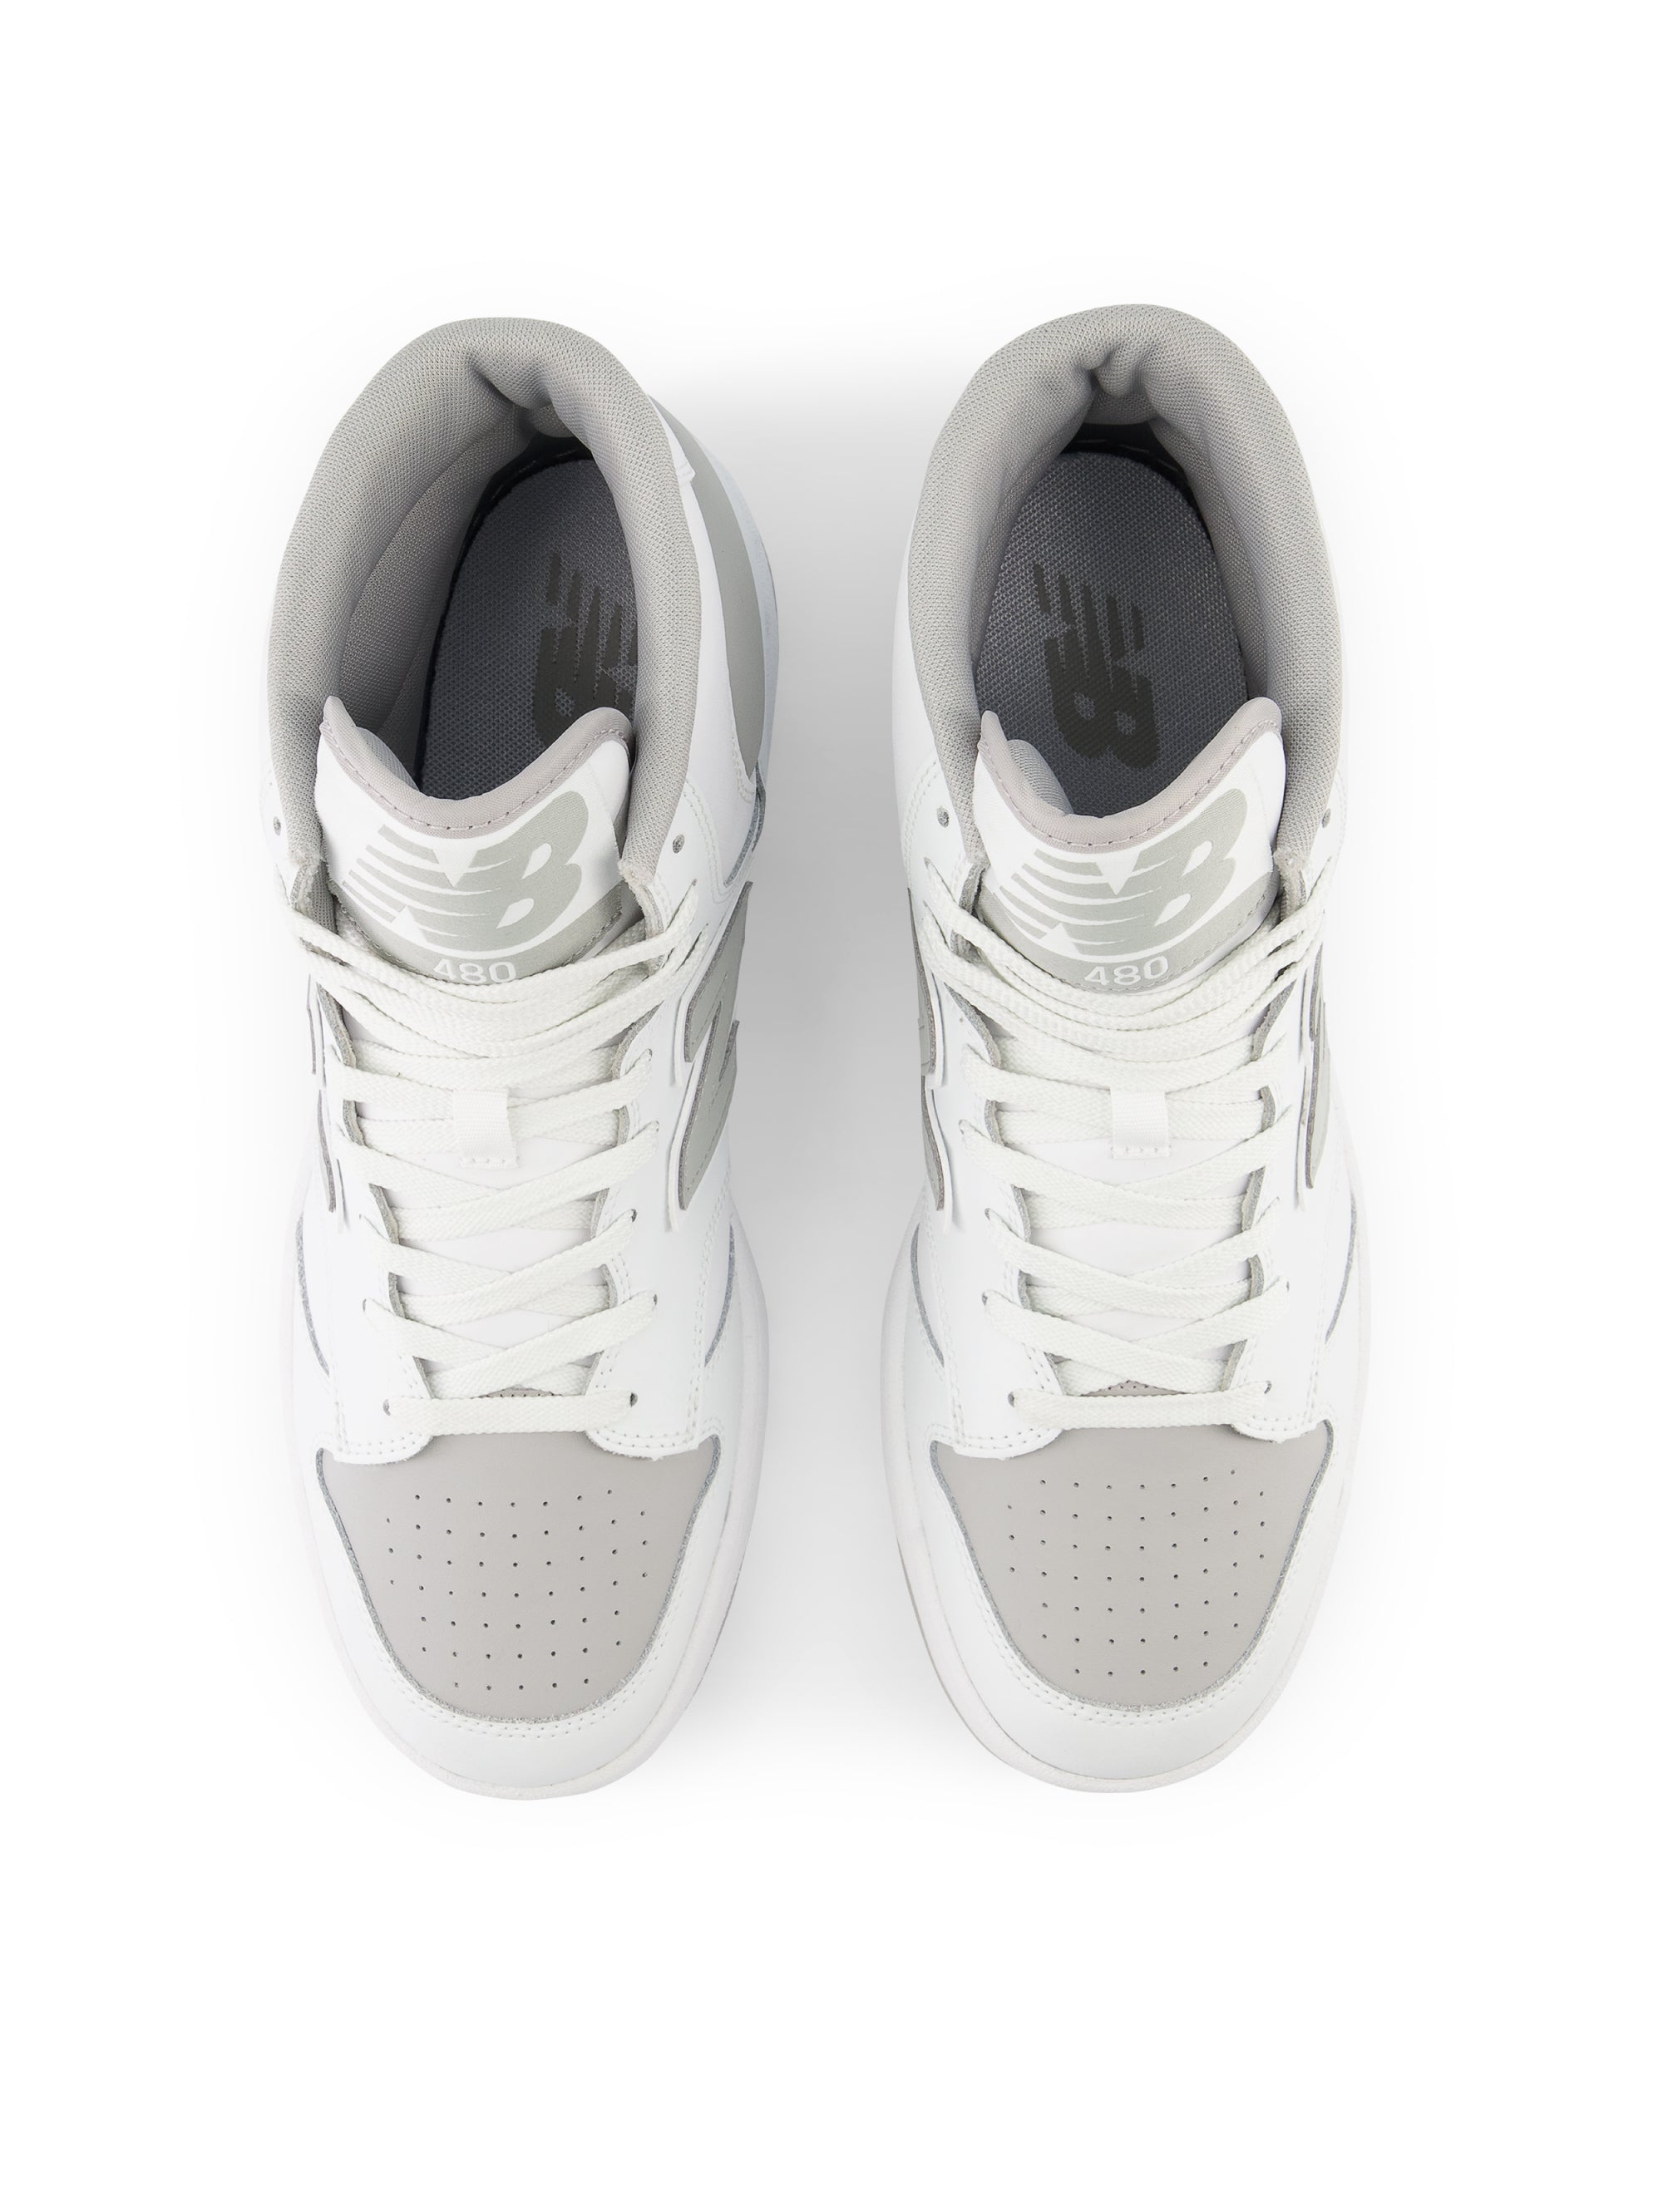 Hohe Sneakers im Retro-Basketball-Stil, Grau/Weiß